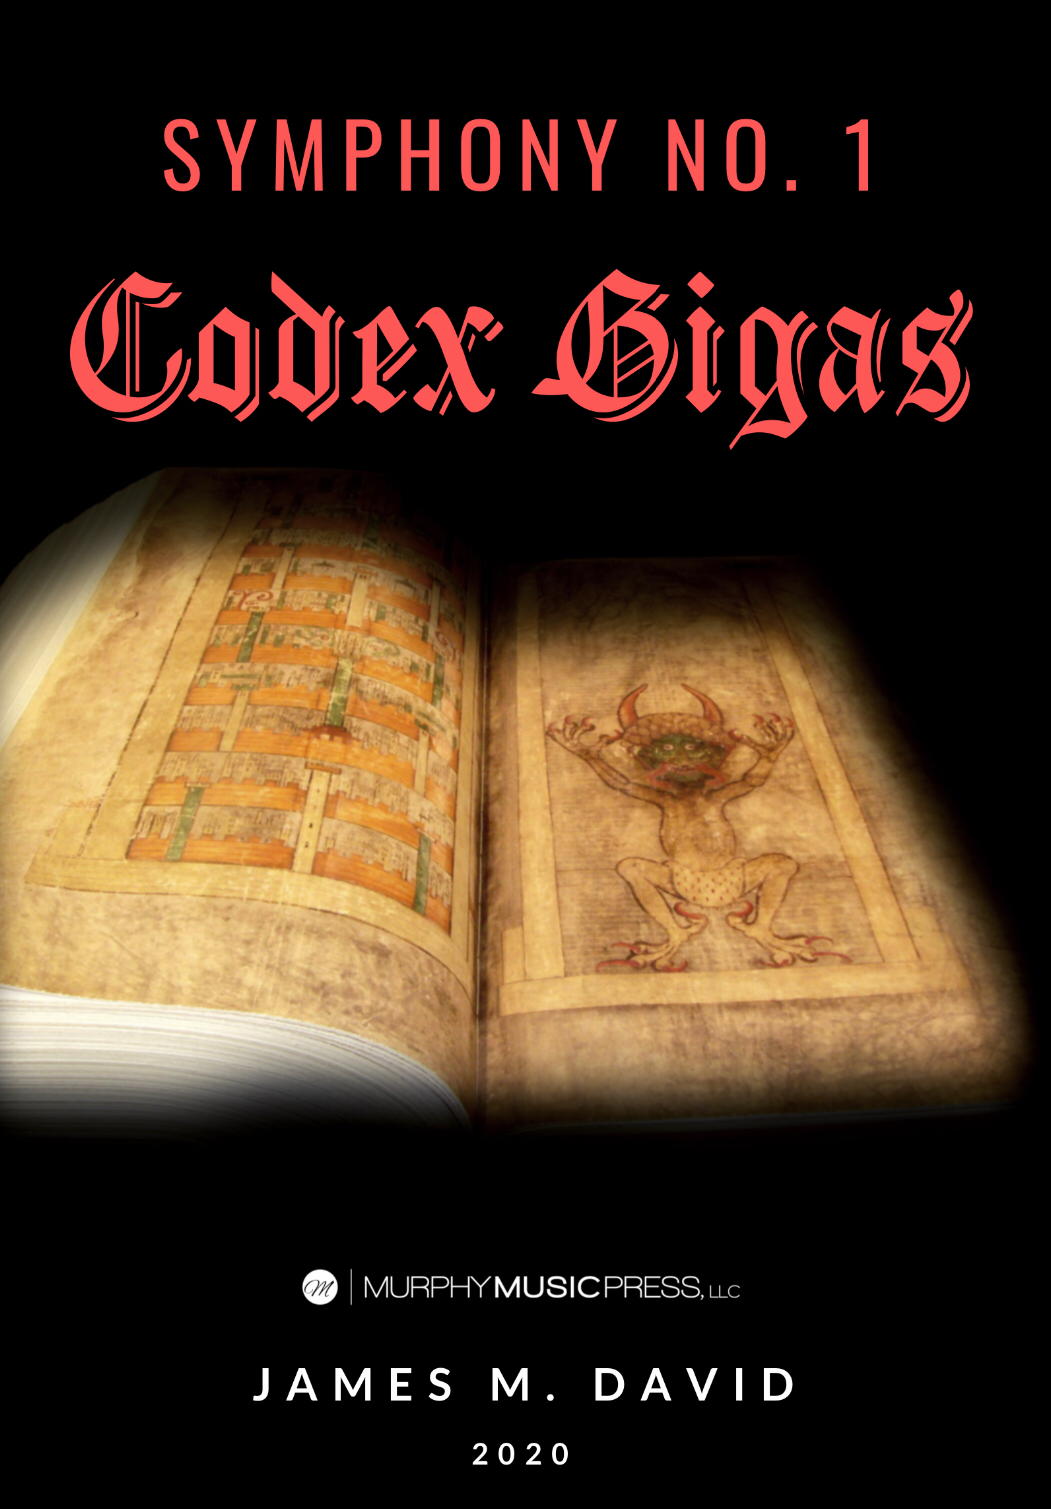 Symphony No. 1: Codex Gigas (Score Only) by James David